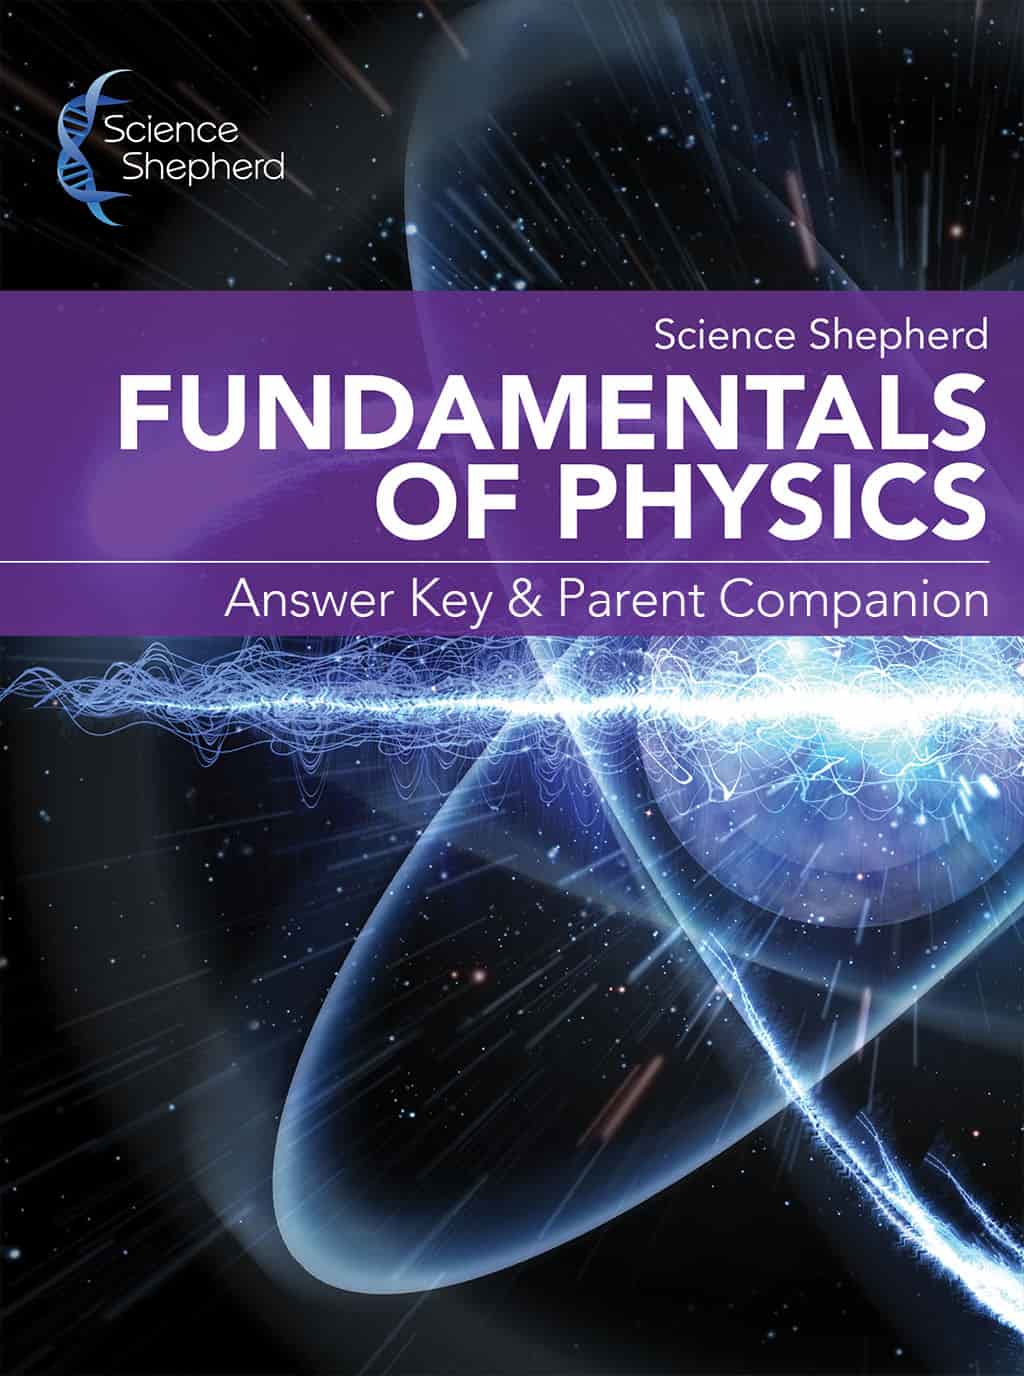 Fundamentals of Physics curriculum homeschool parent guide cover